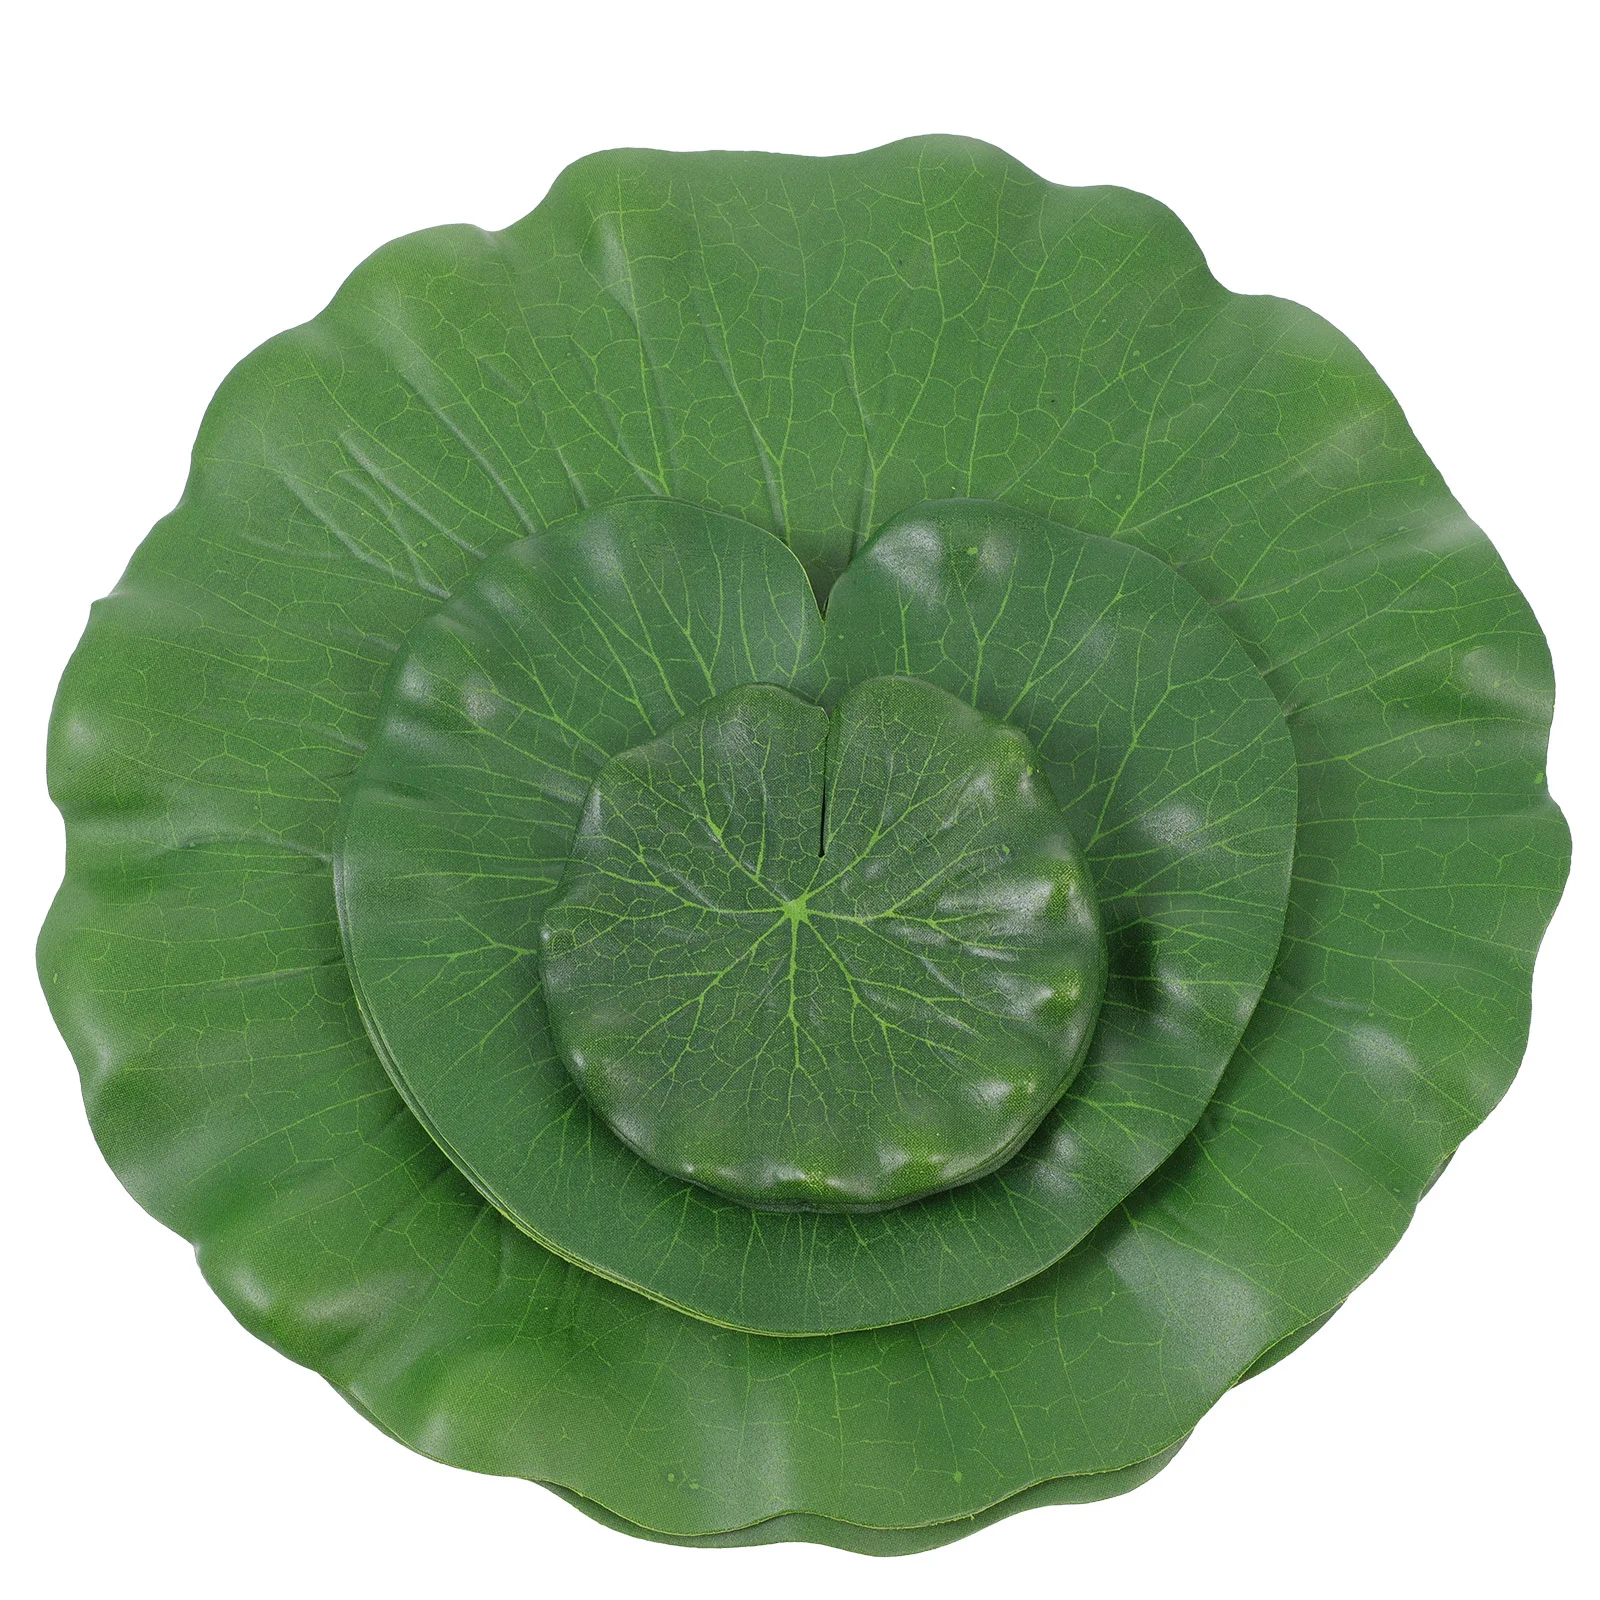 

10 Pcs Fish Tank Simulated Lotus Leaf Floating Pond Decor Faux Plants Fishpond Greenery Pool Leaves Decorations Emulation